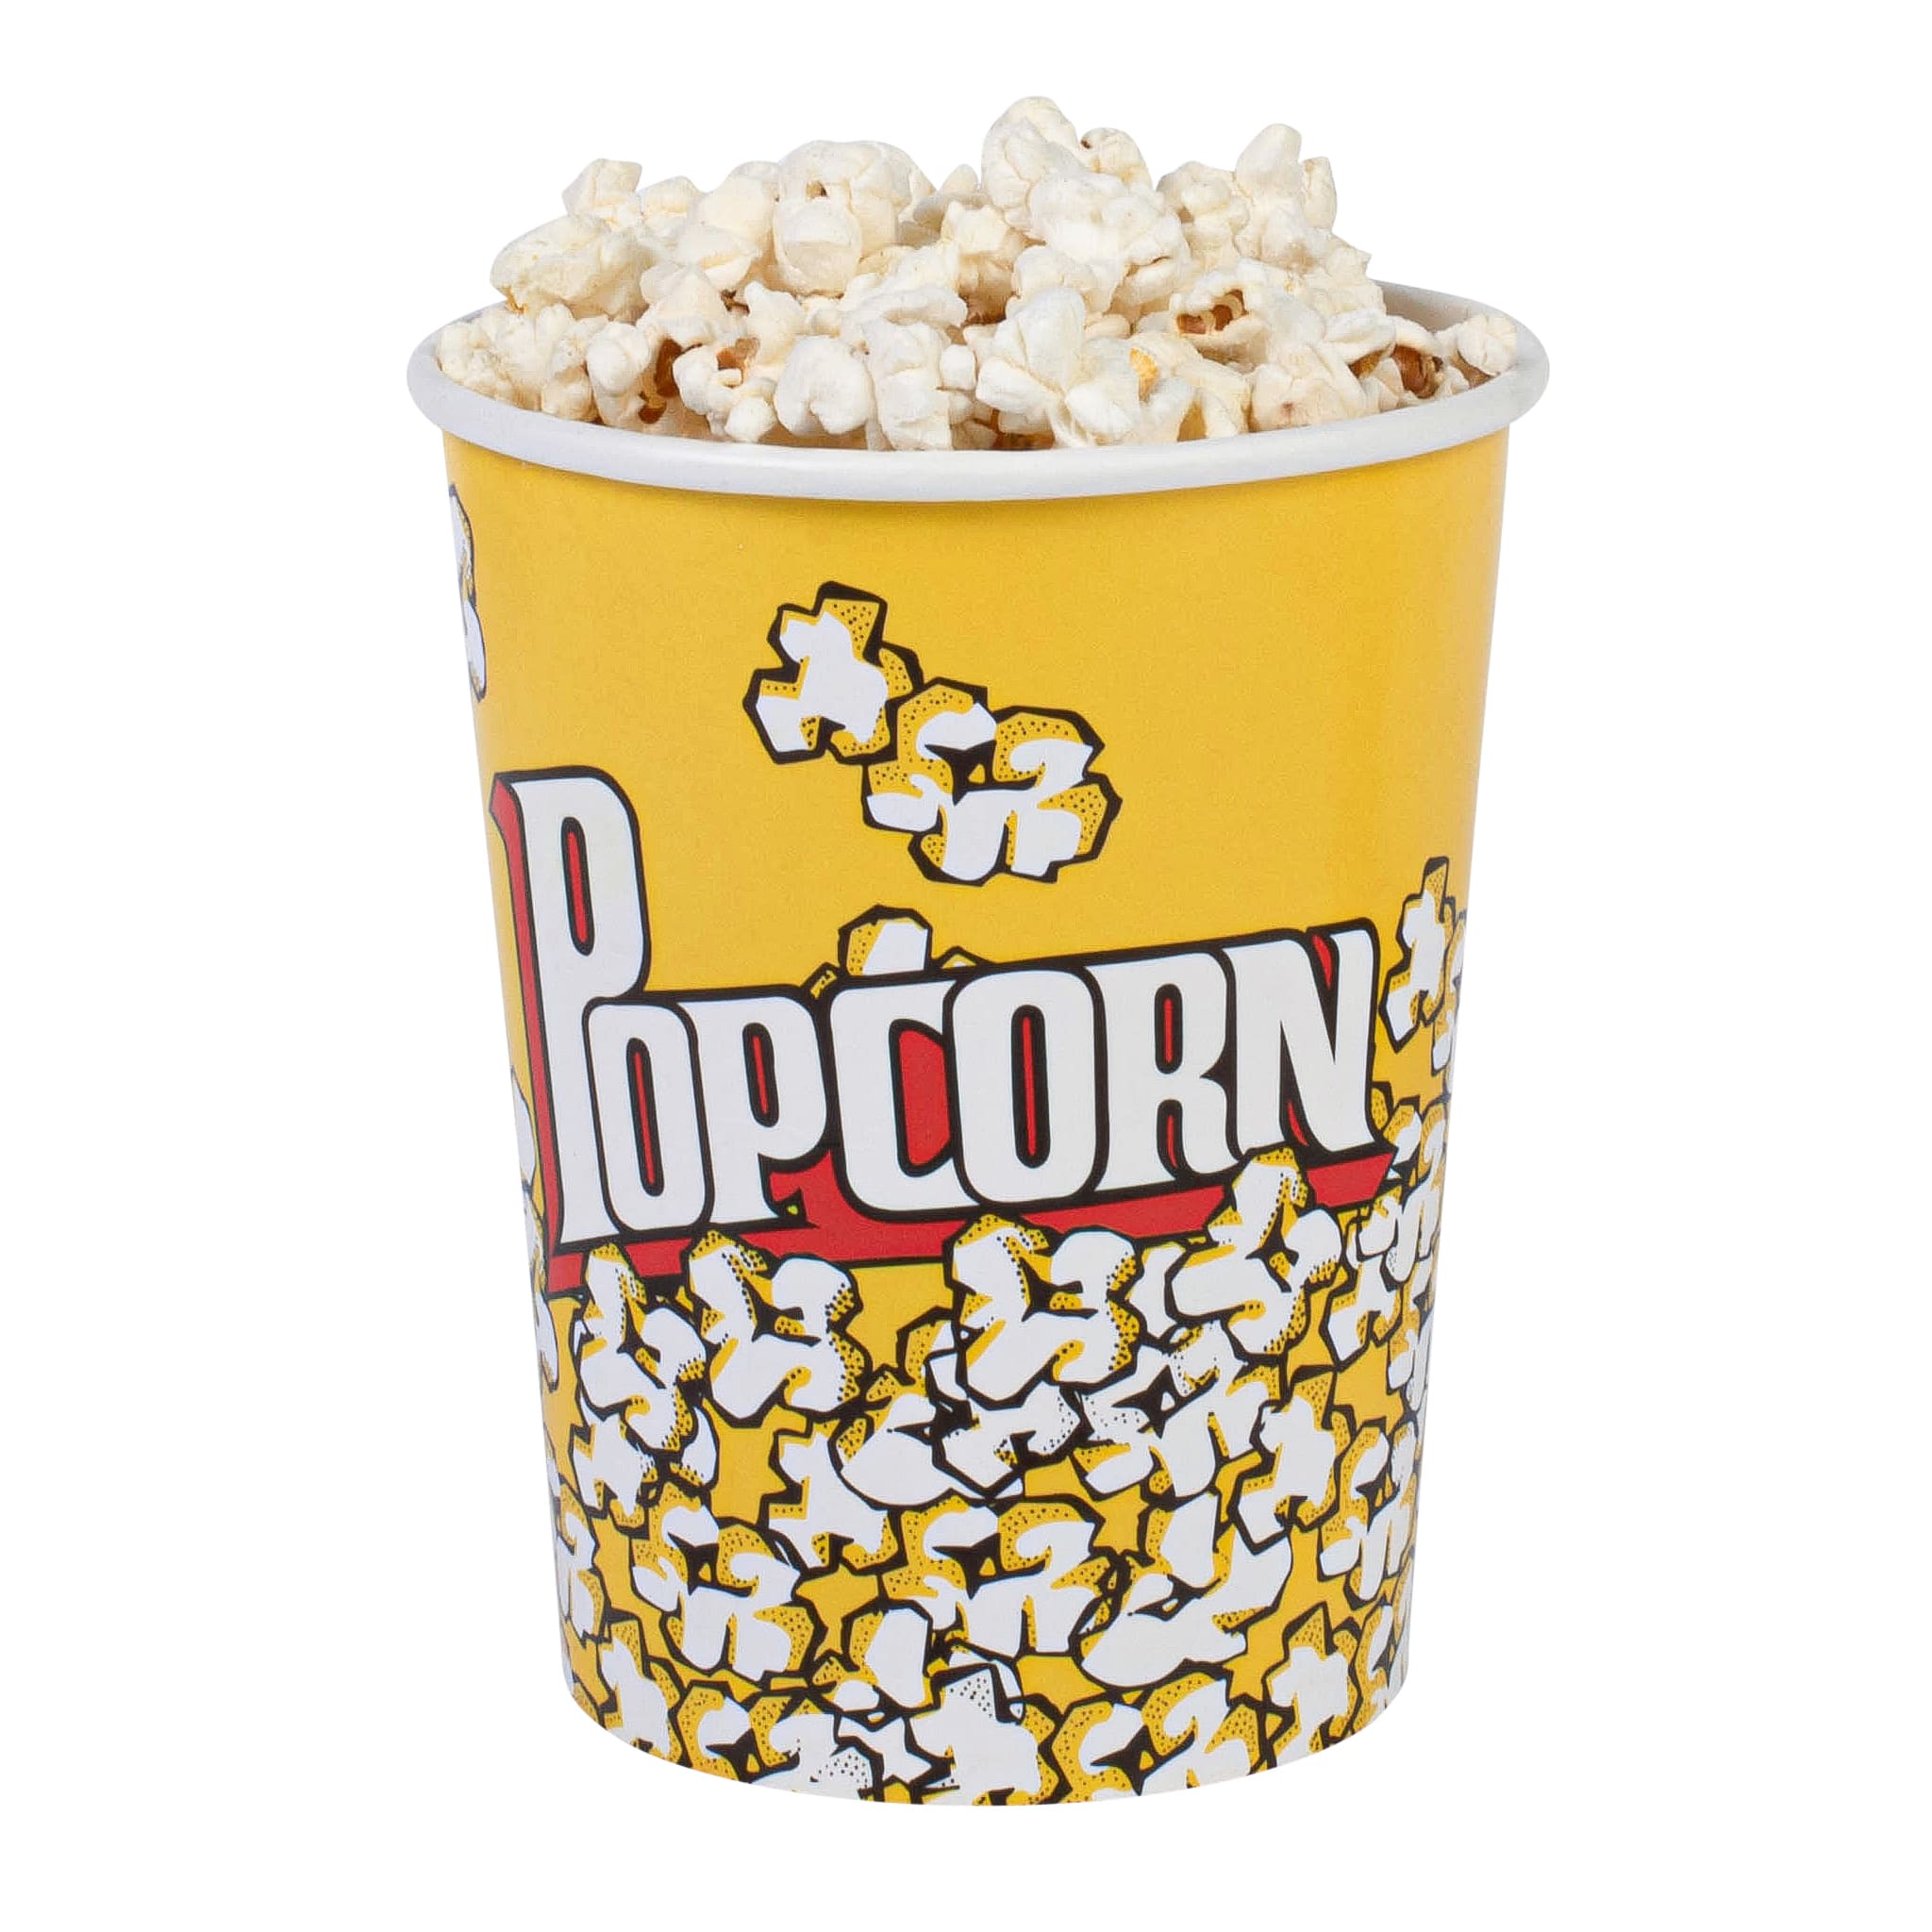 32oz Cinema-Style Popcorn Tubs